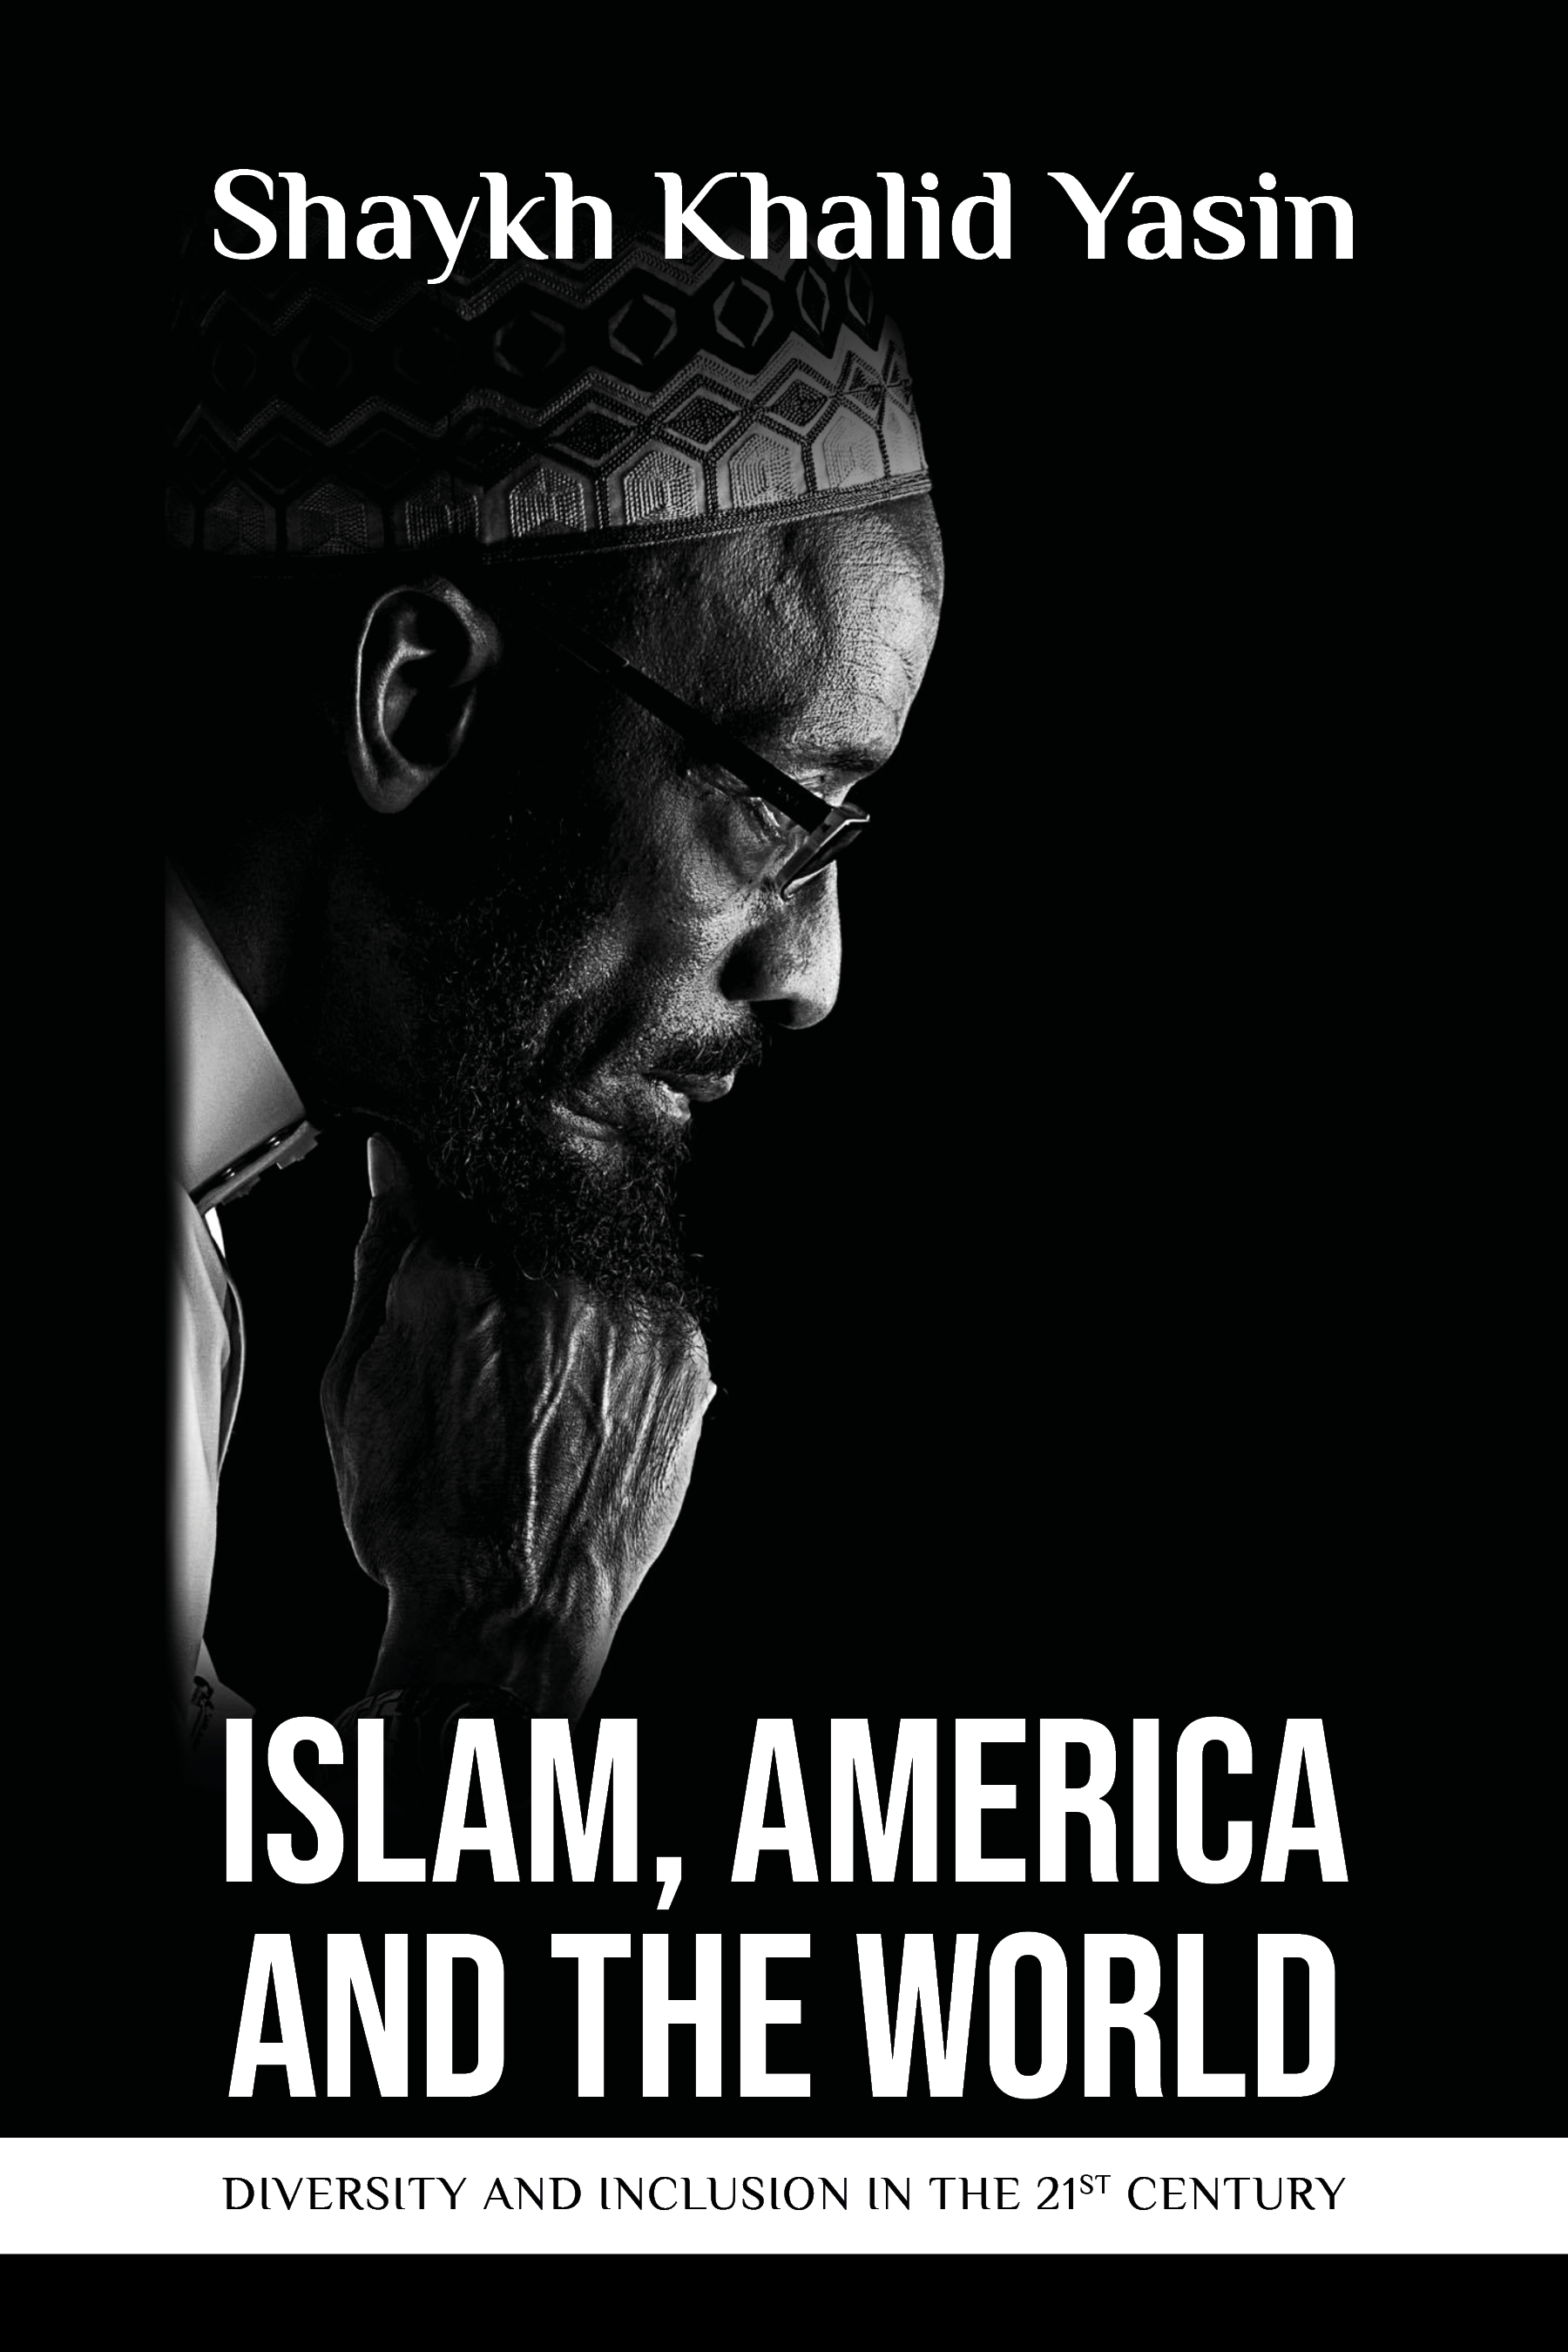 Islam, America and the World